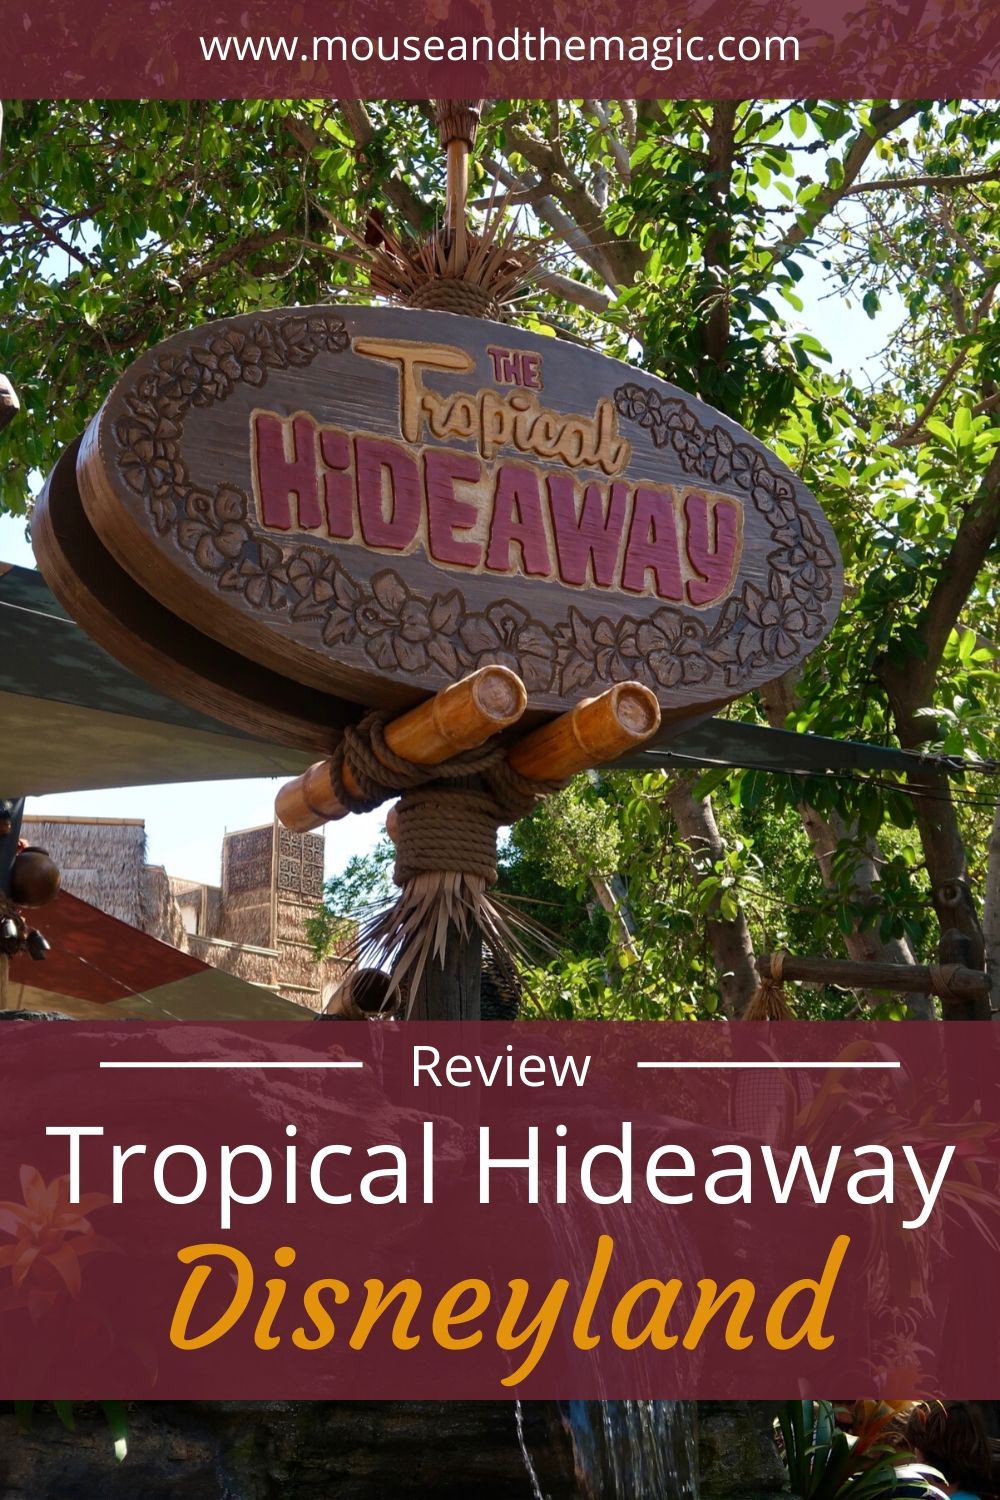 Review - Tropical Hideaway - Disneyland